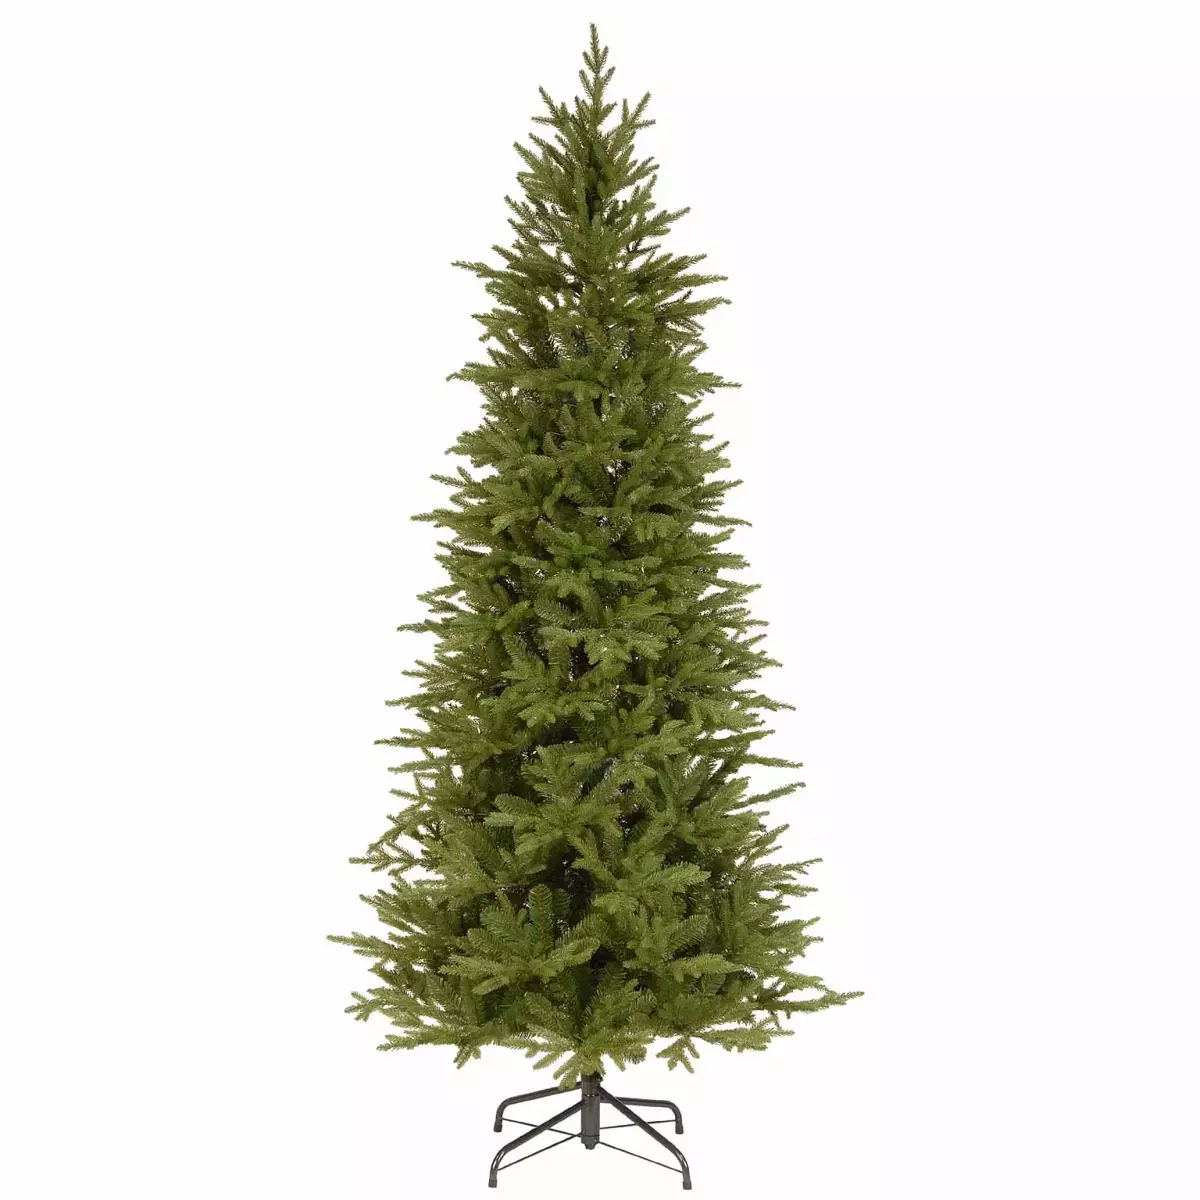 Bedminster Slim Christmas Tree Un-Lit - 7.5ft - image 1